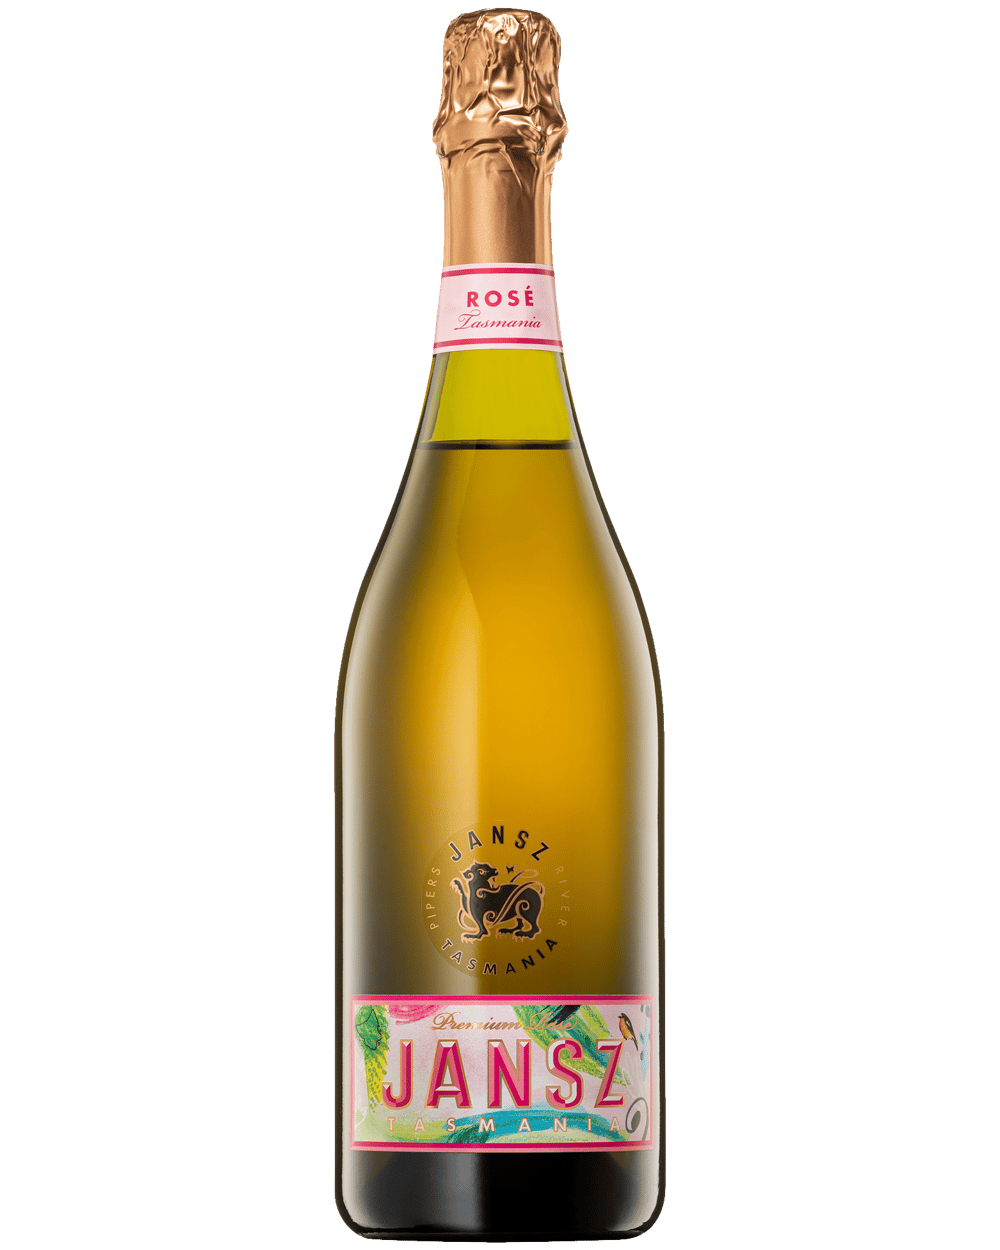 Janz Premium Rose Sparkling